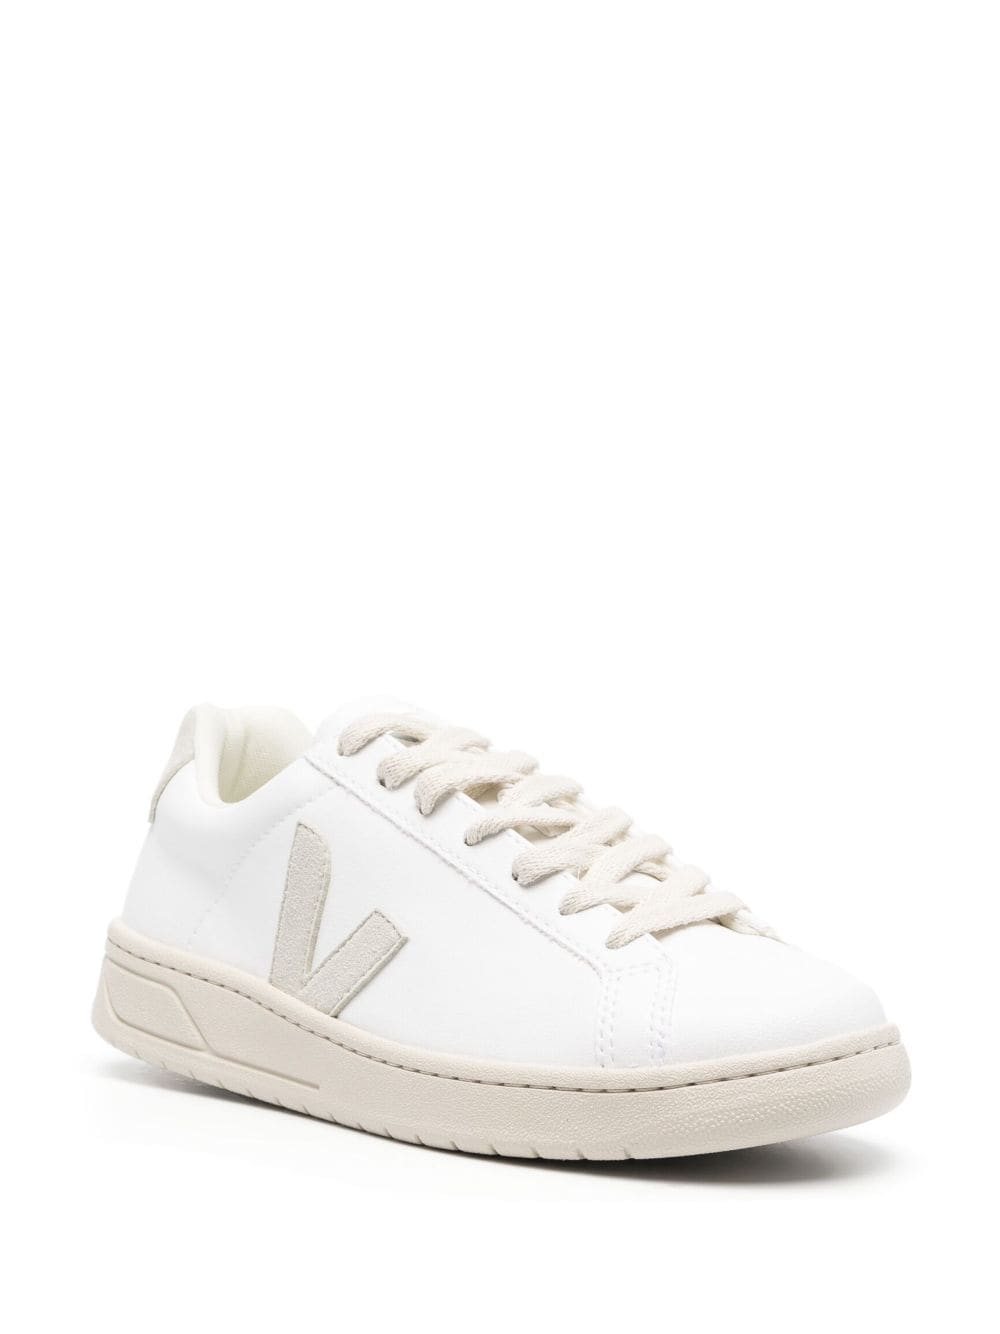 Shop Veja Urca Sneakers In White Natural